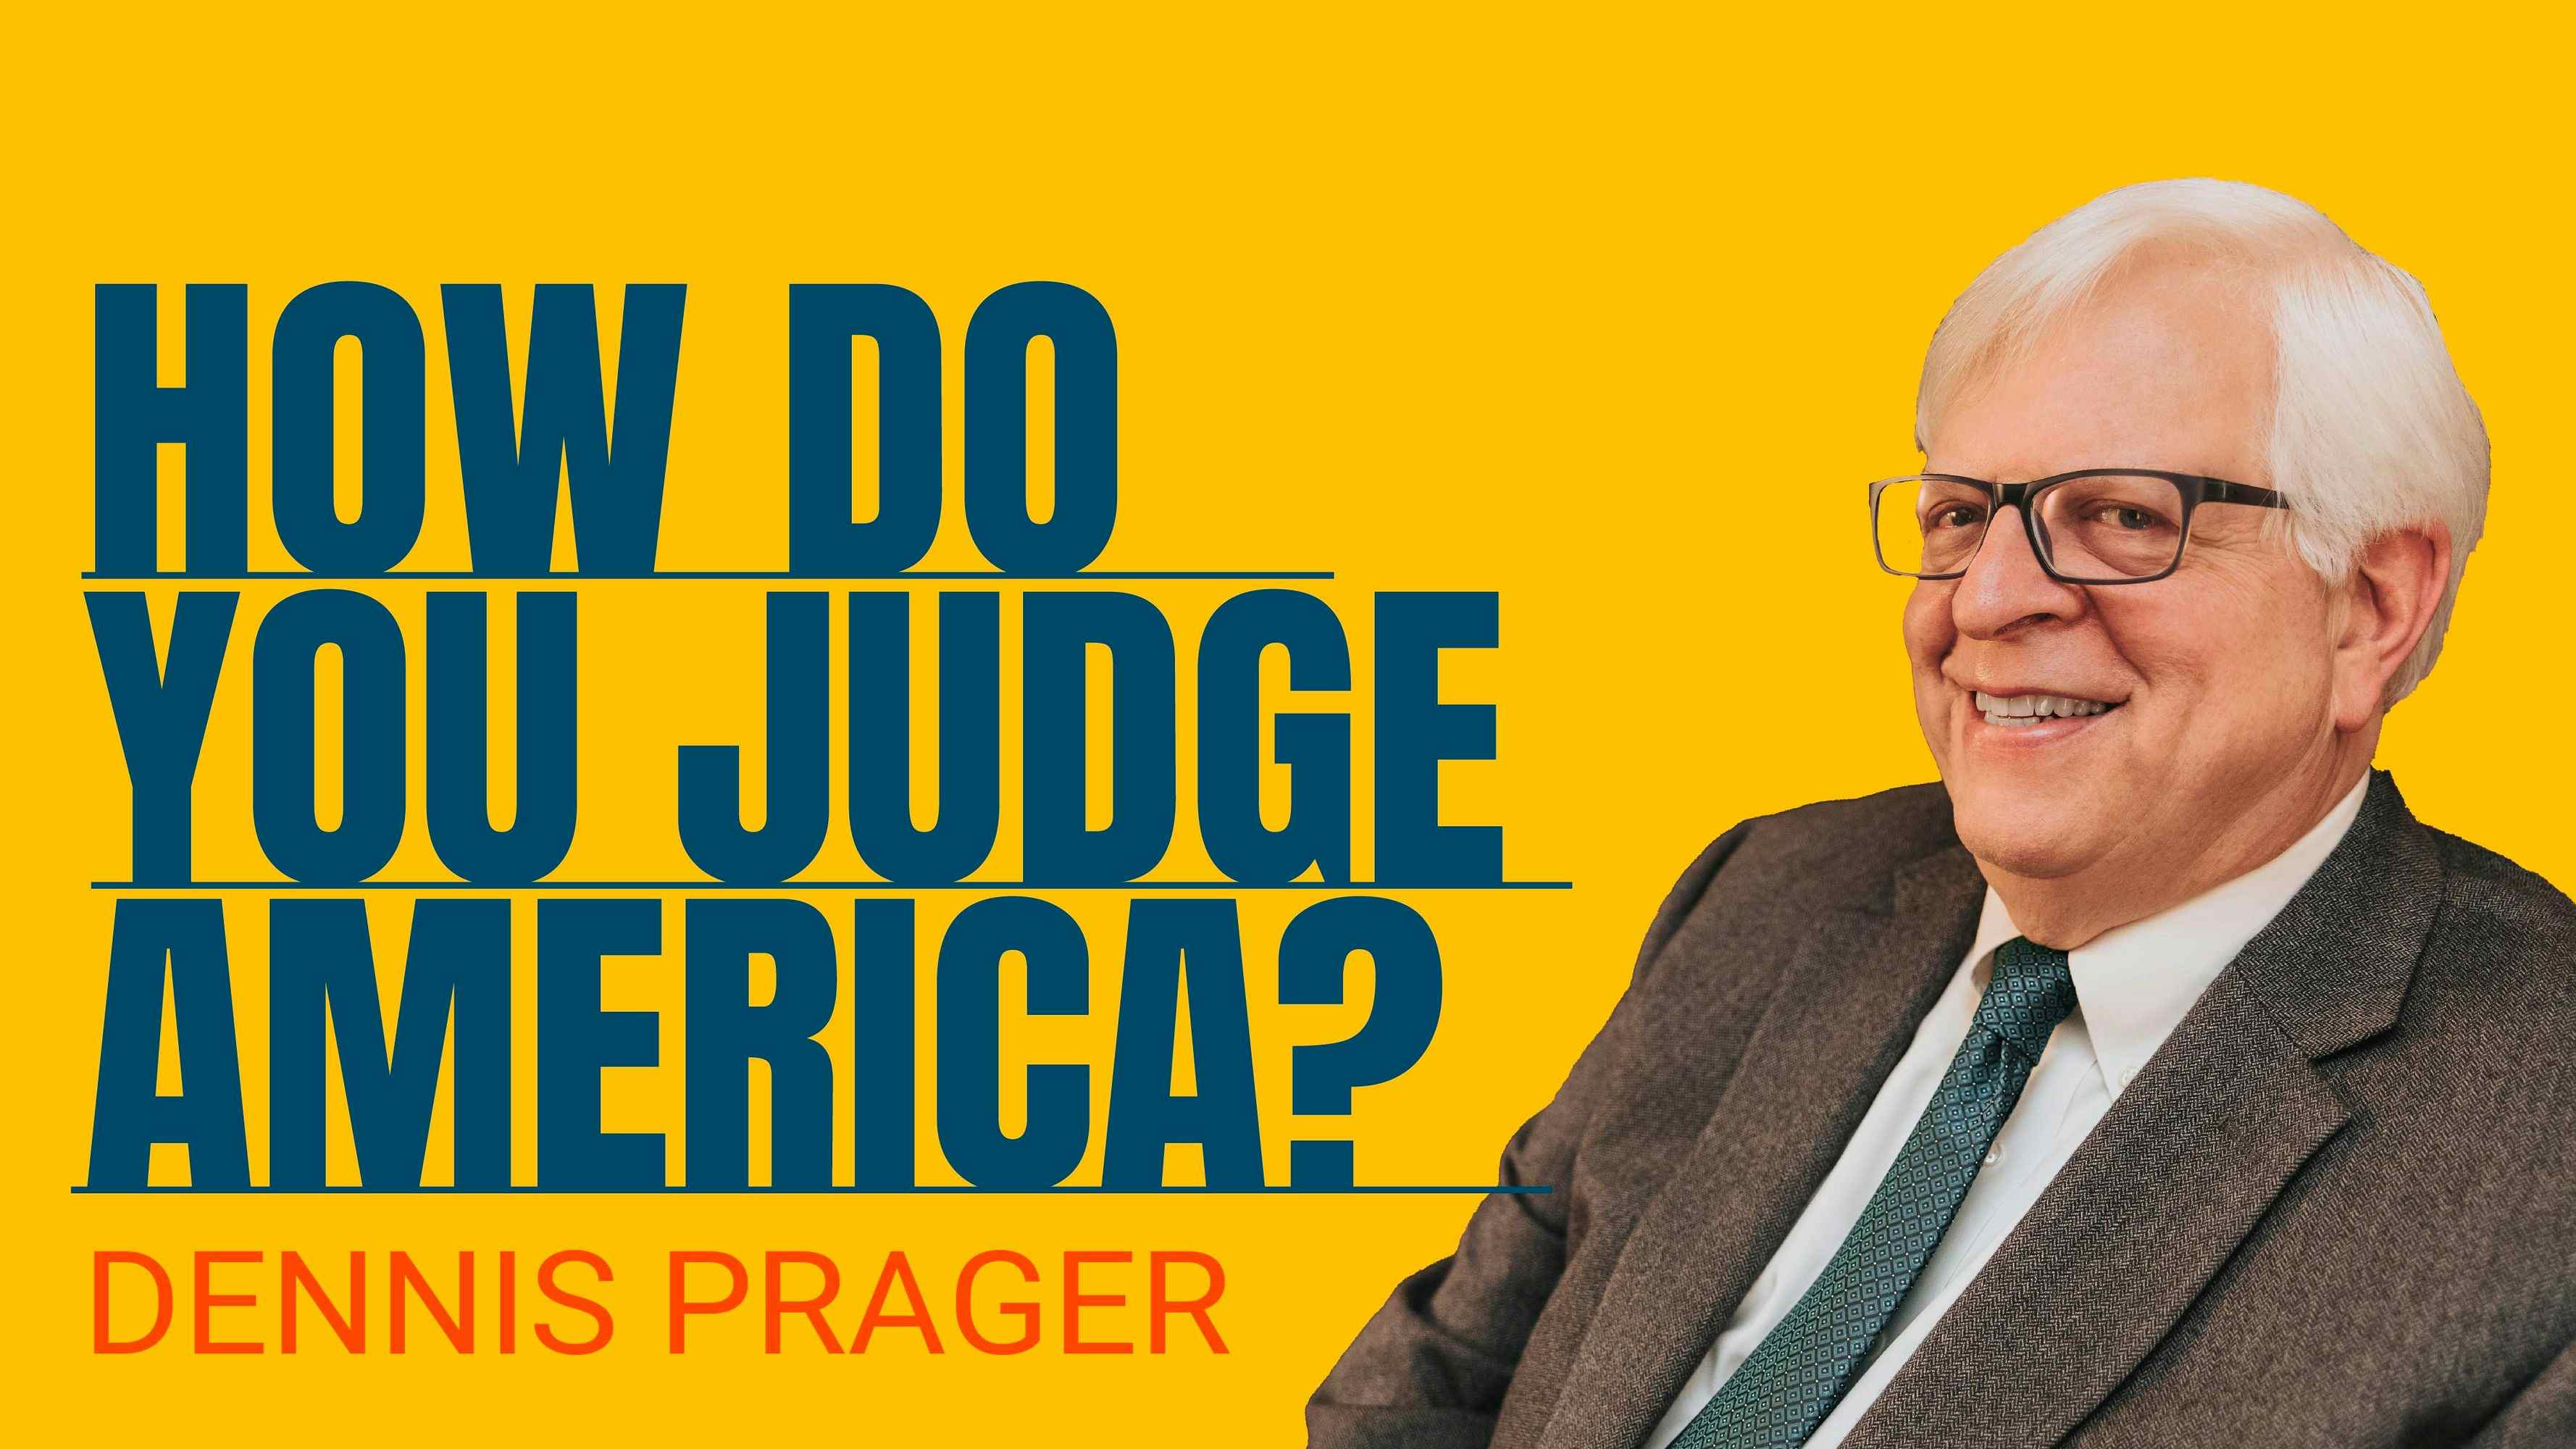 How Do You Judge America? Left vs. Right #3